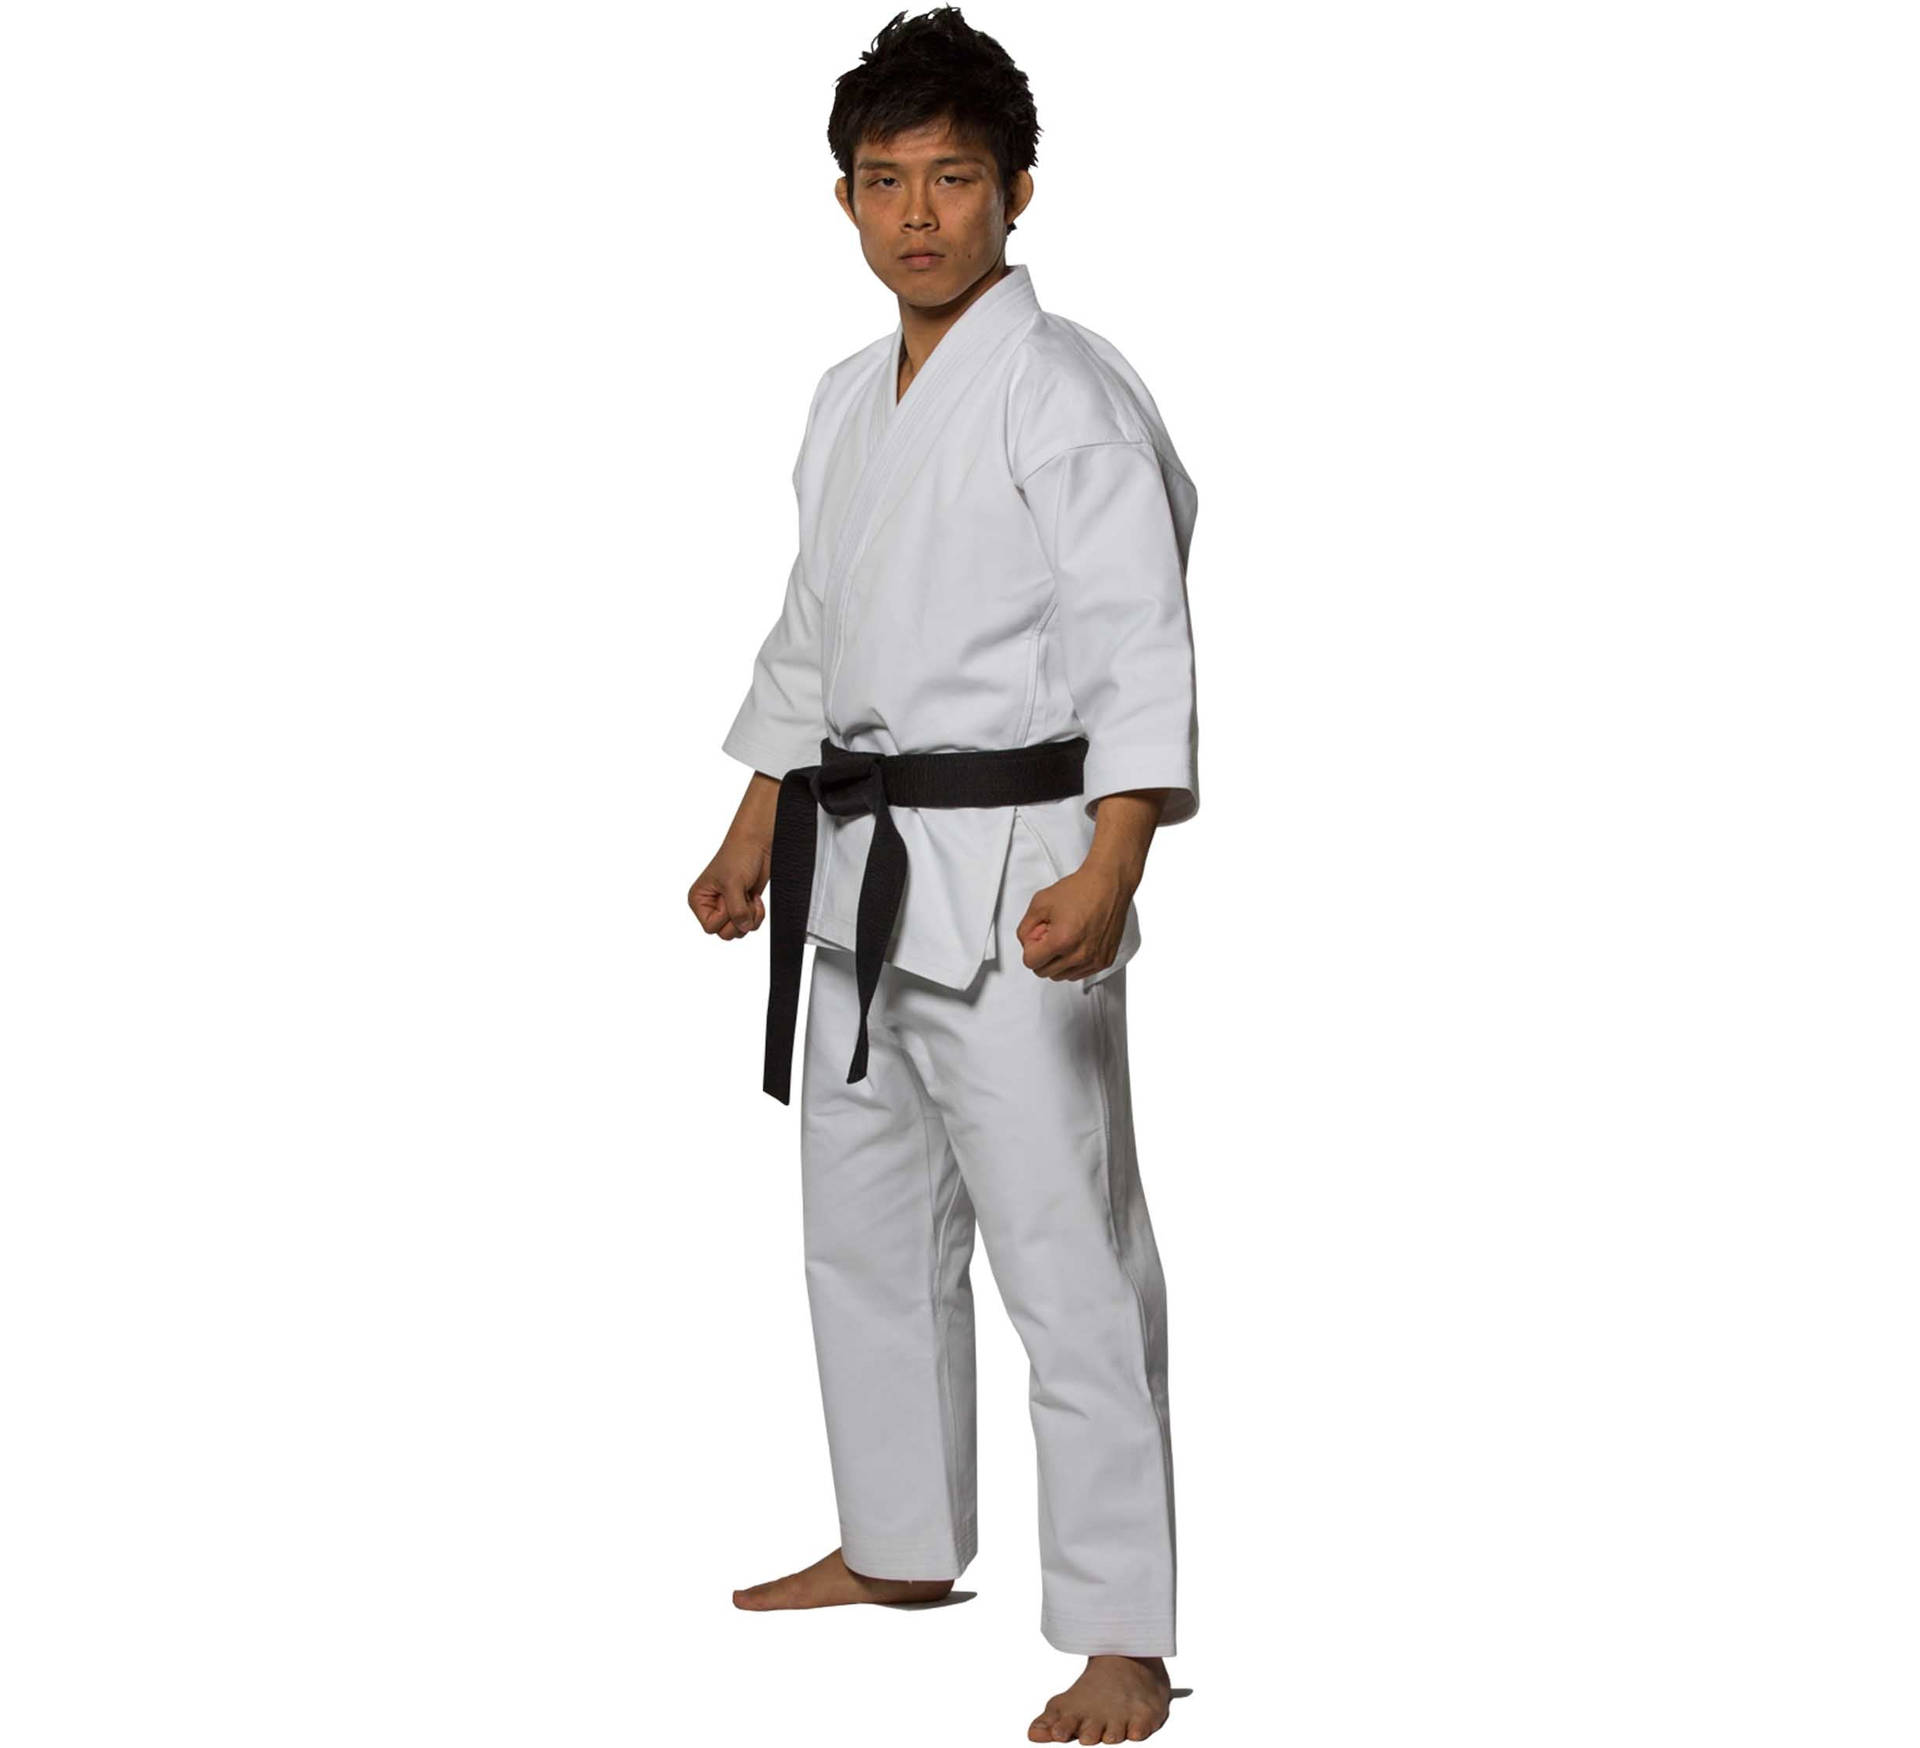 Karate Man In Karate Uniform On White Background Wallpaper